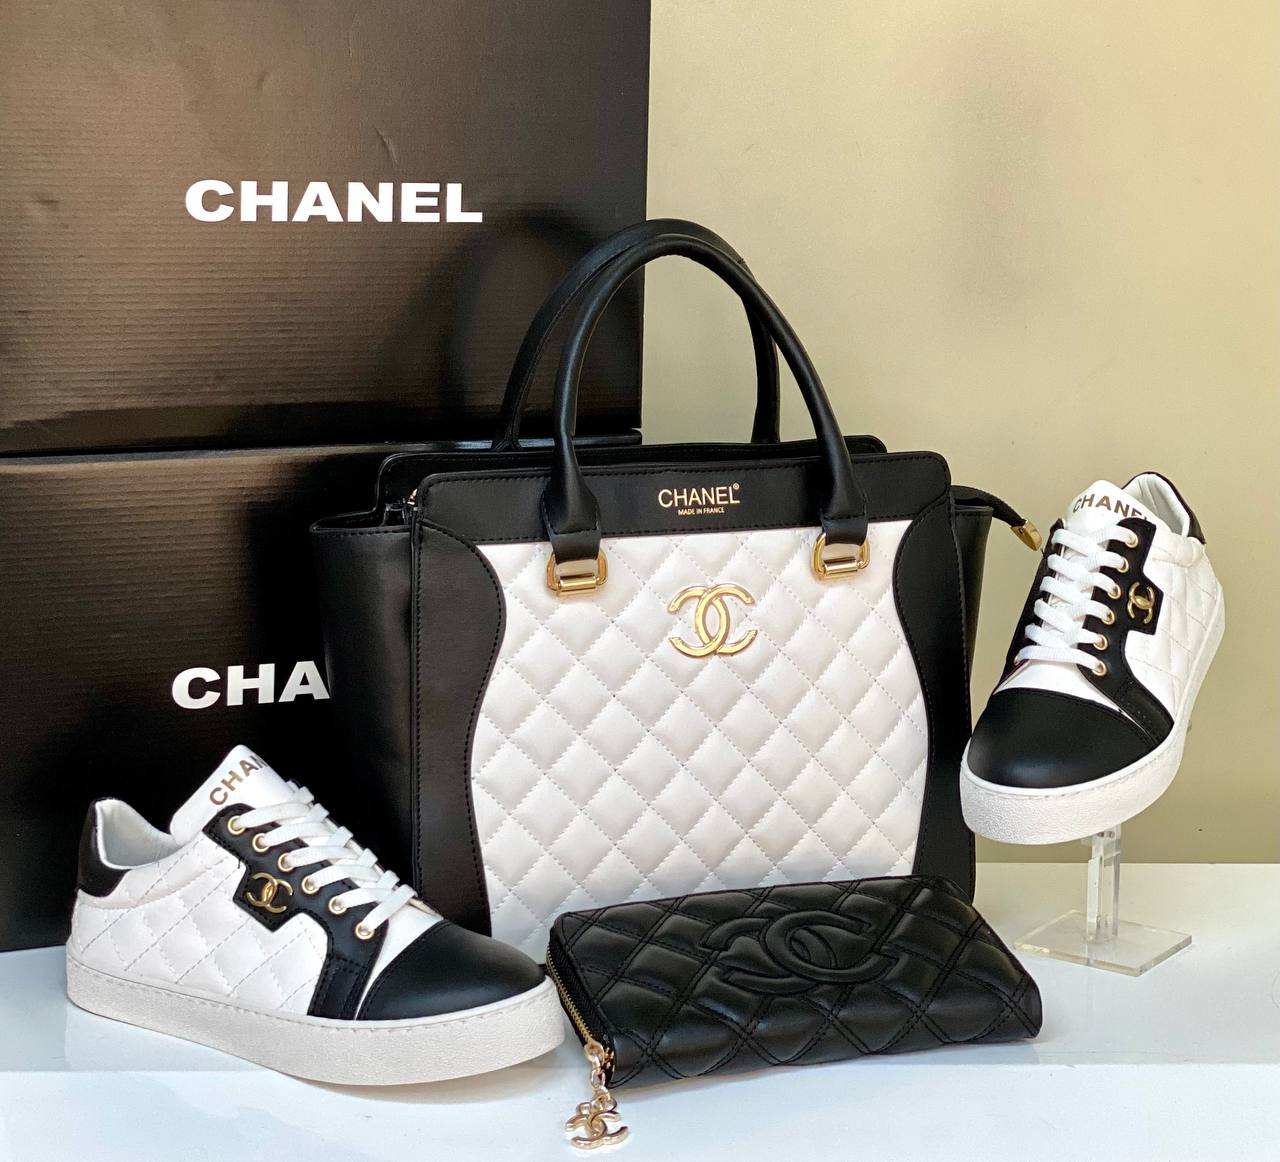 Chanel handbag 2021